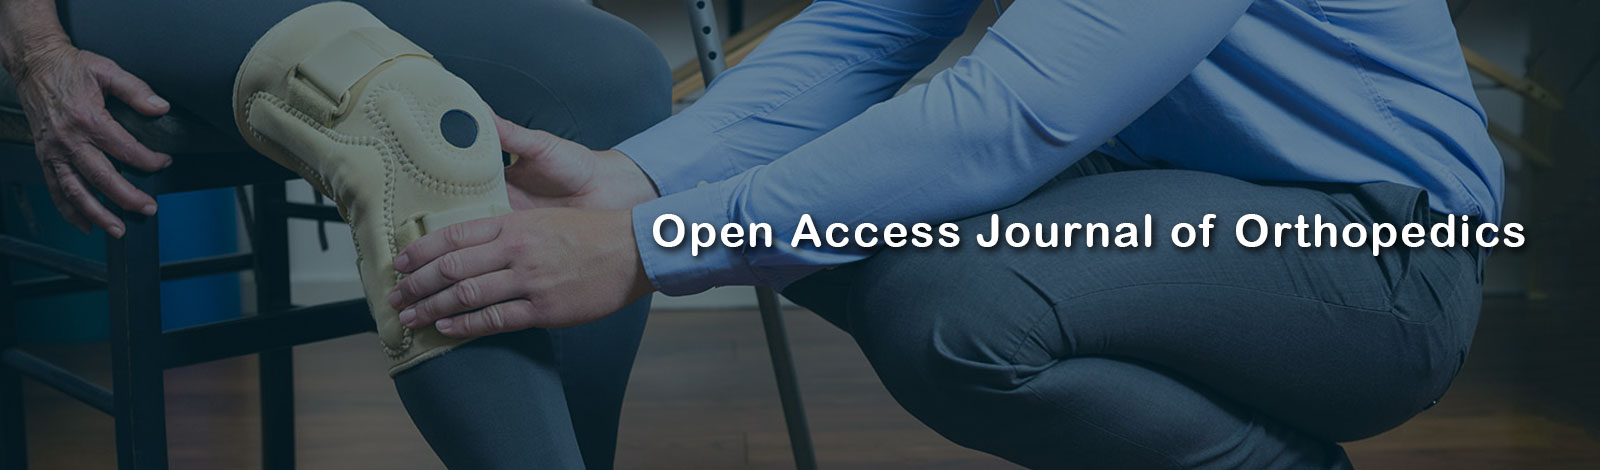 Open Access Journal of Orthopedics